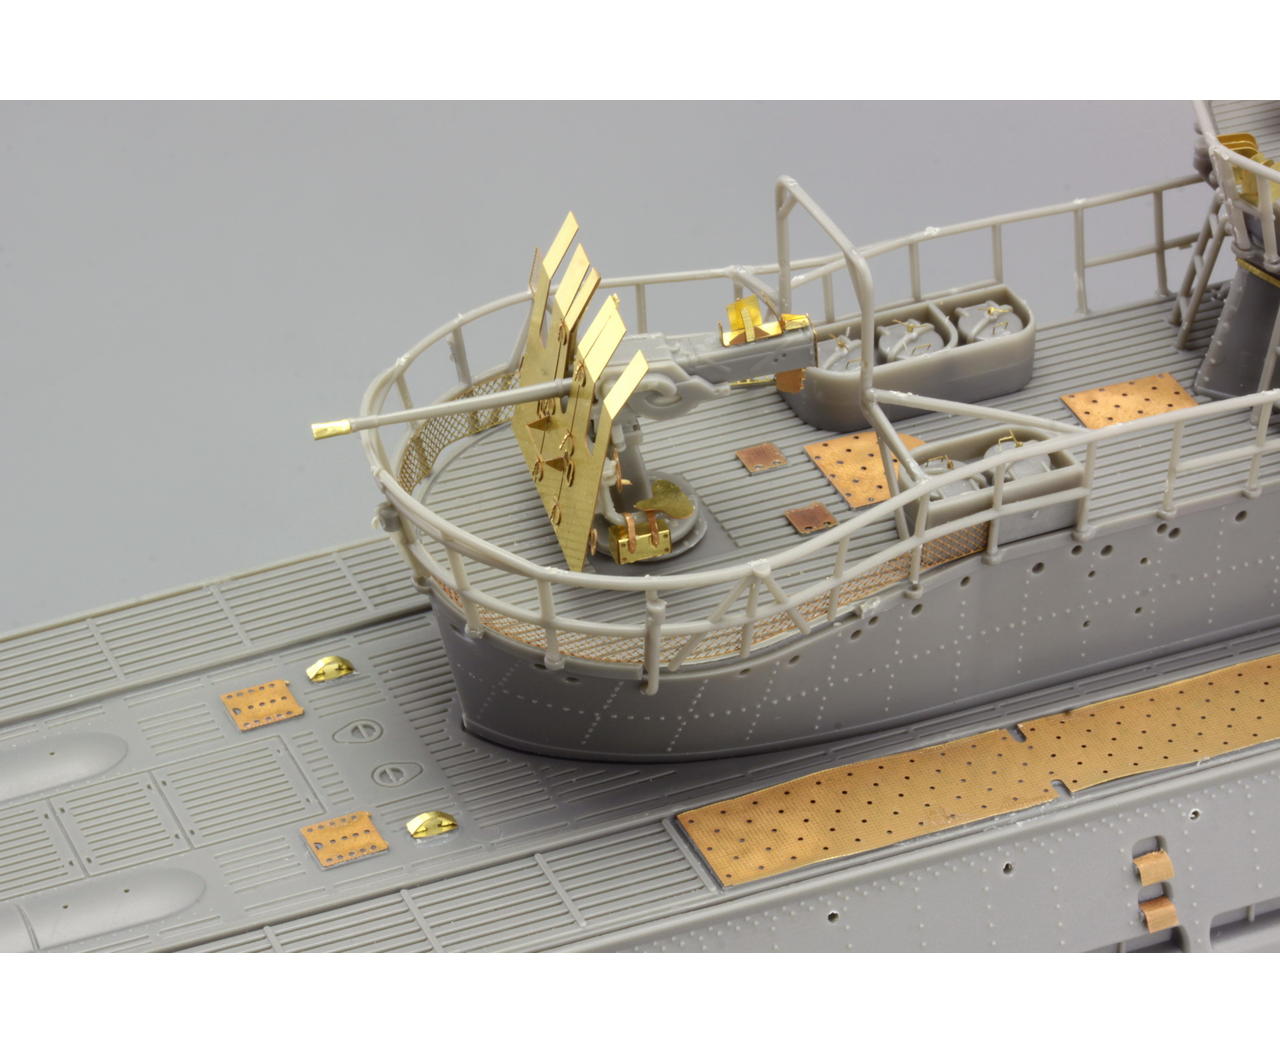 U-boat IXC part 2 1/72 - Eduard Store